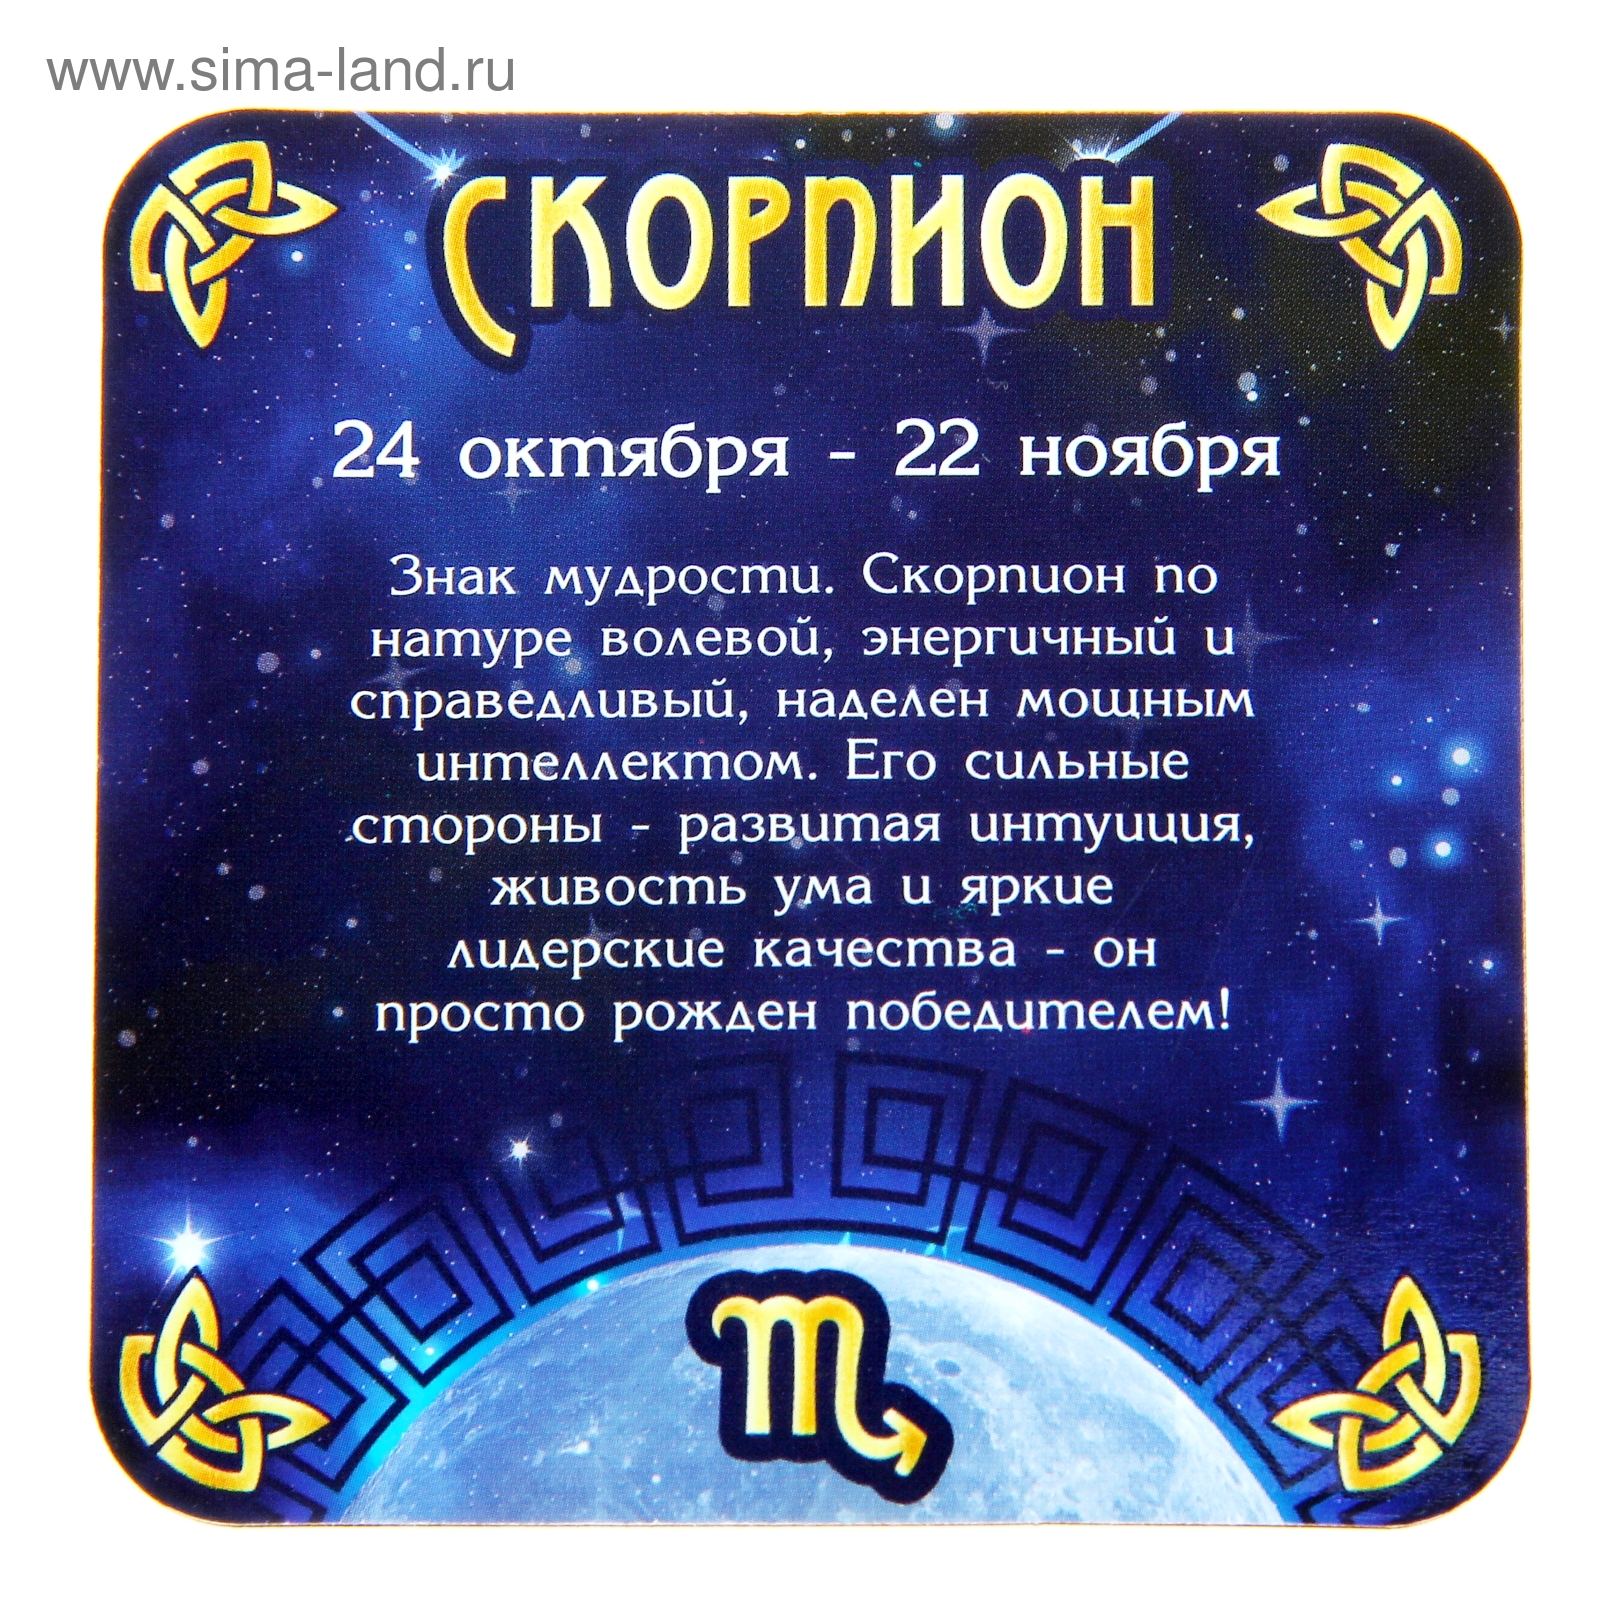 Зодиака день рождения. Лев гороскоп характеристика. Описание знака зодиака Лев. Гороскоп "Скорпион". Лев знак зодиака характеристика.